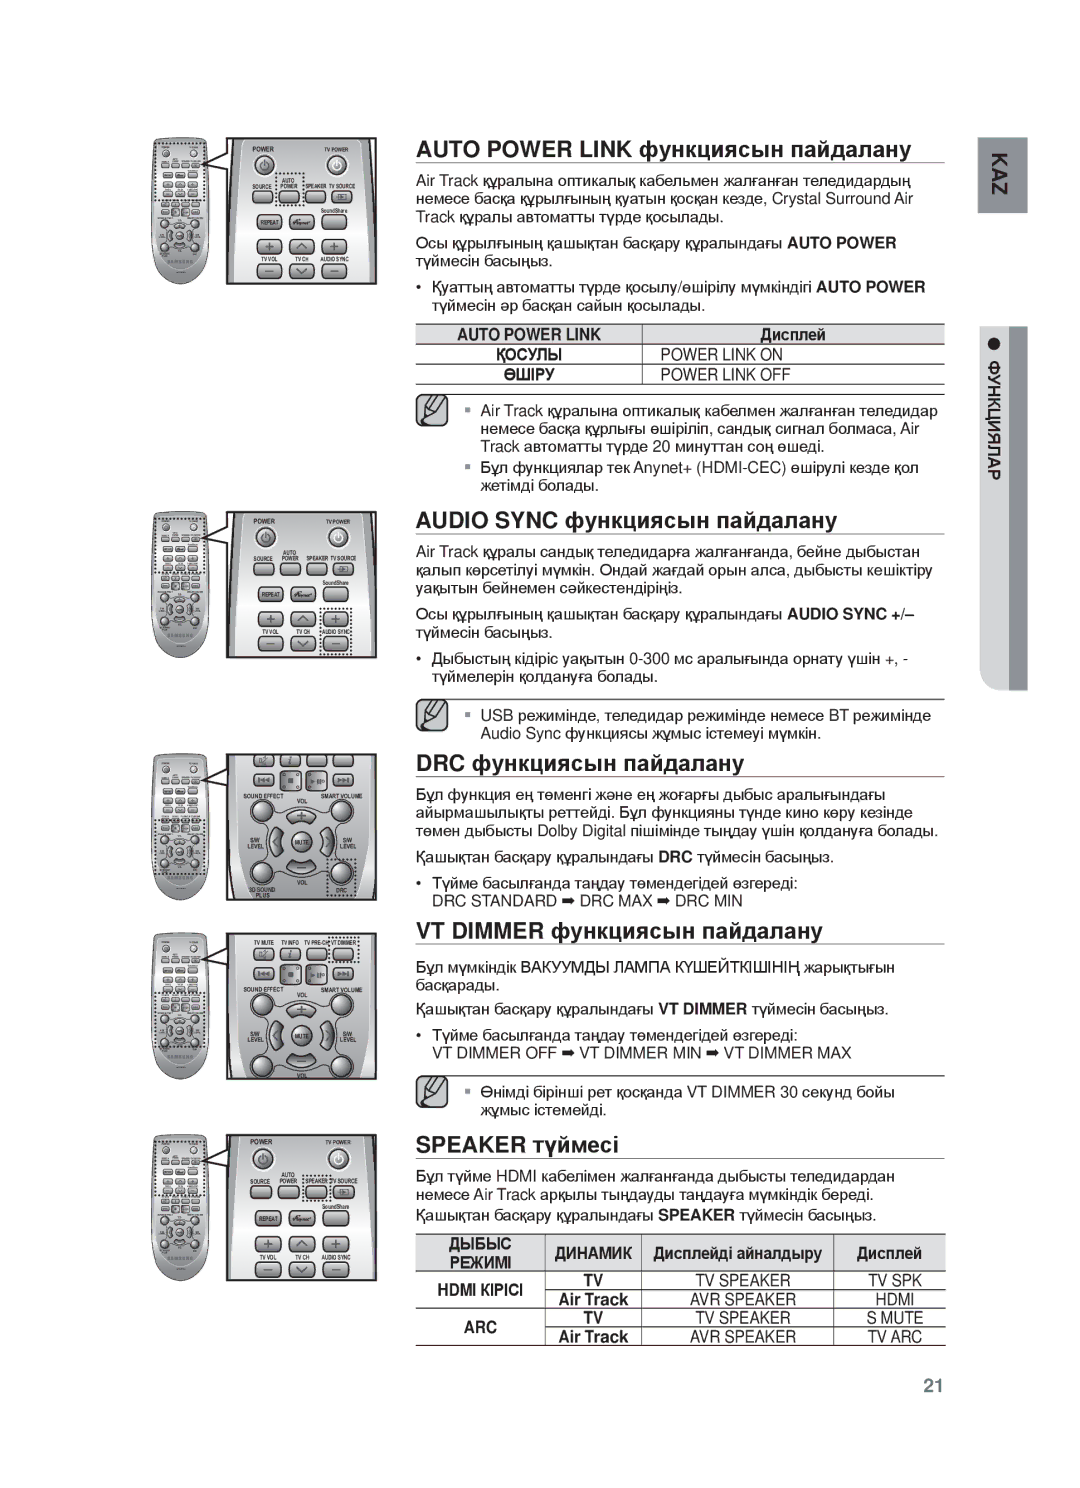 Samsung HW-F750/RU manual Auto Power Link фɭнкцияɫын пɚɣдɚлɚнɭ, Audio Sync фɭнкцияɫын пɚɣдɚлɚнɭ, DRC фɭнкцияɫын пɚɣдɚлɚнɭ 